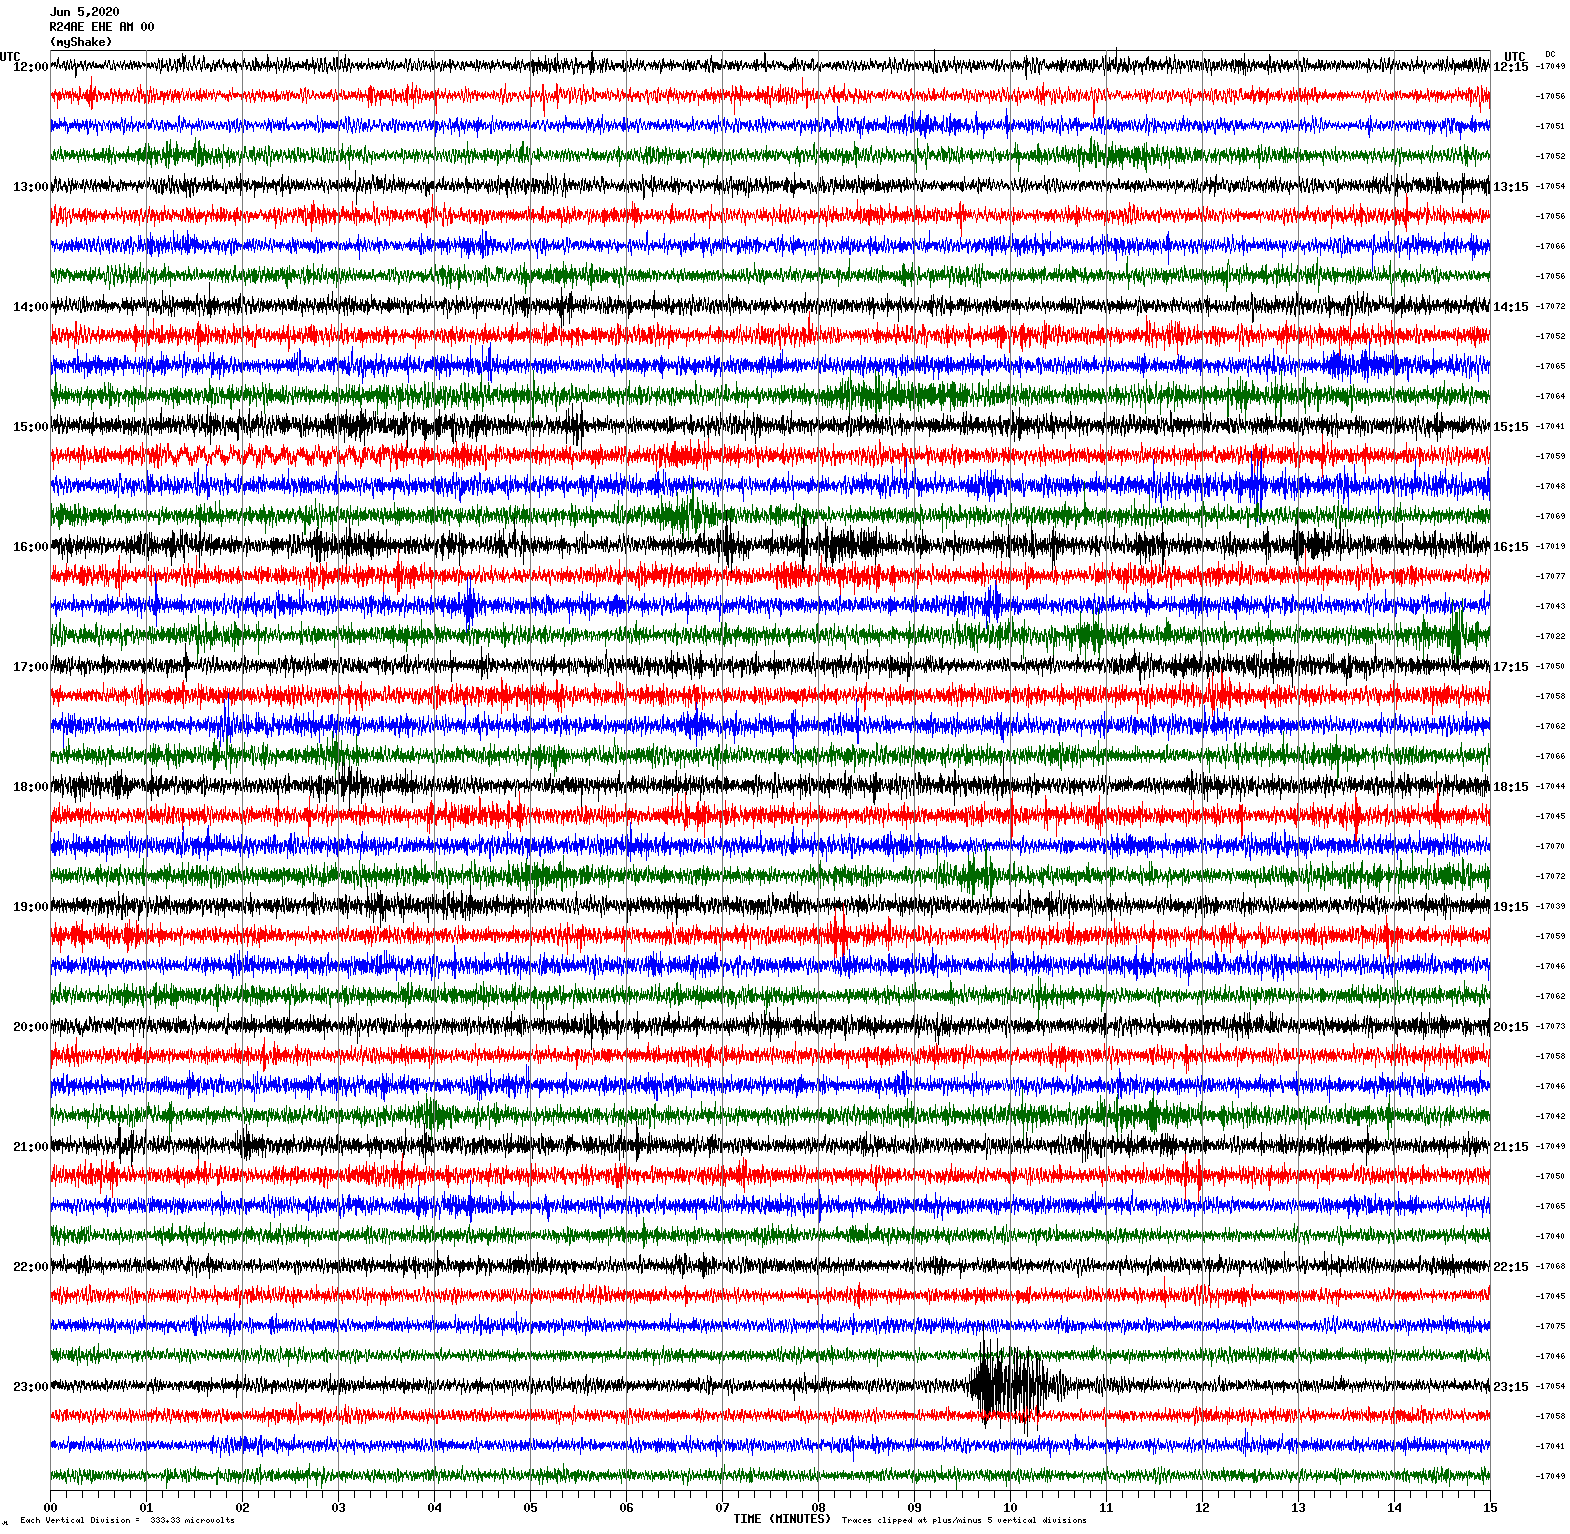 /seismic-data/R24AE/R24AE_EHE_AM_00.2020060512.gif